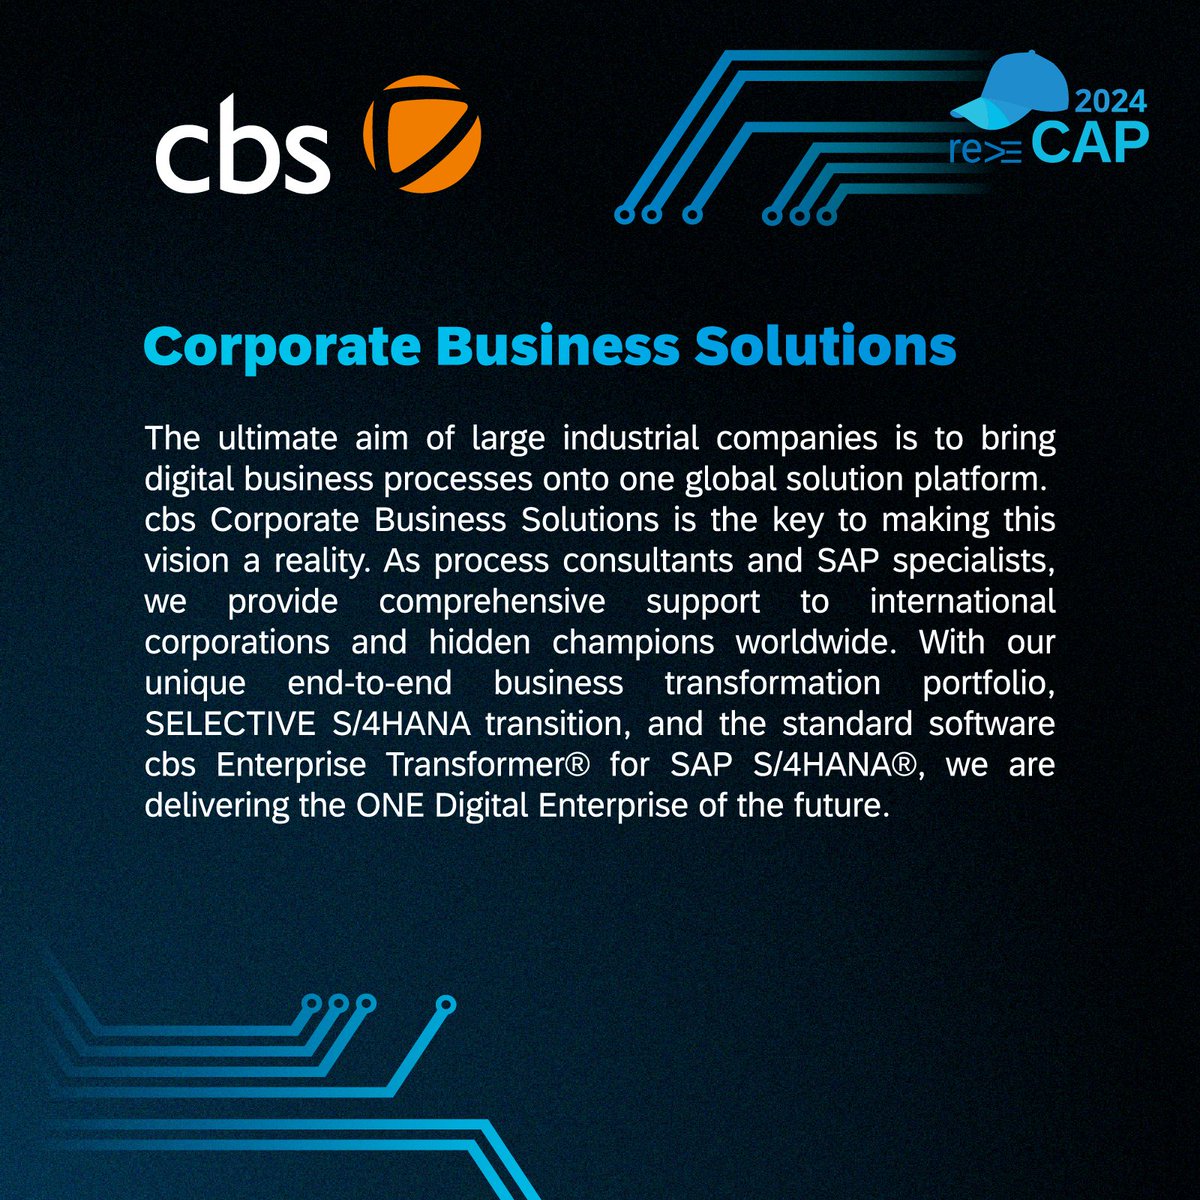 $> cds add sponsor 'cbs' --for 're>≡CAP 2024'